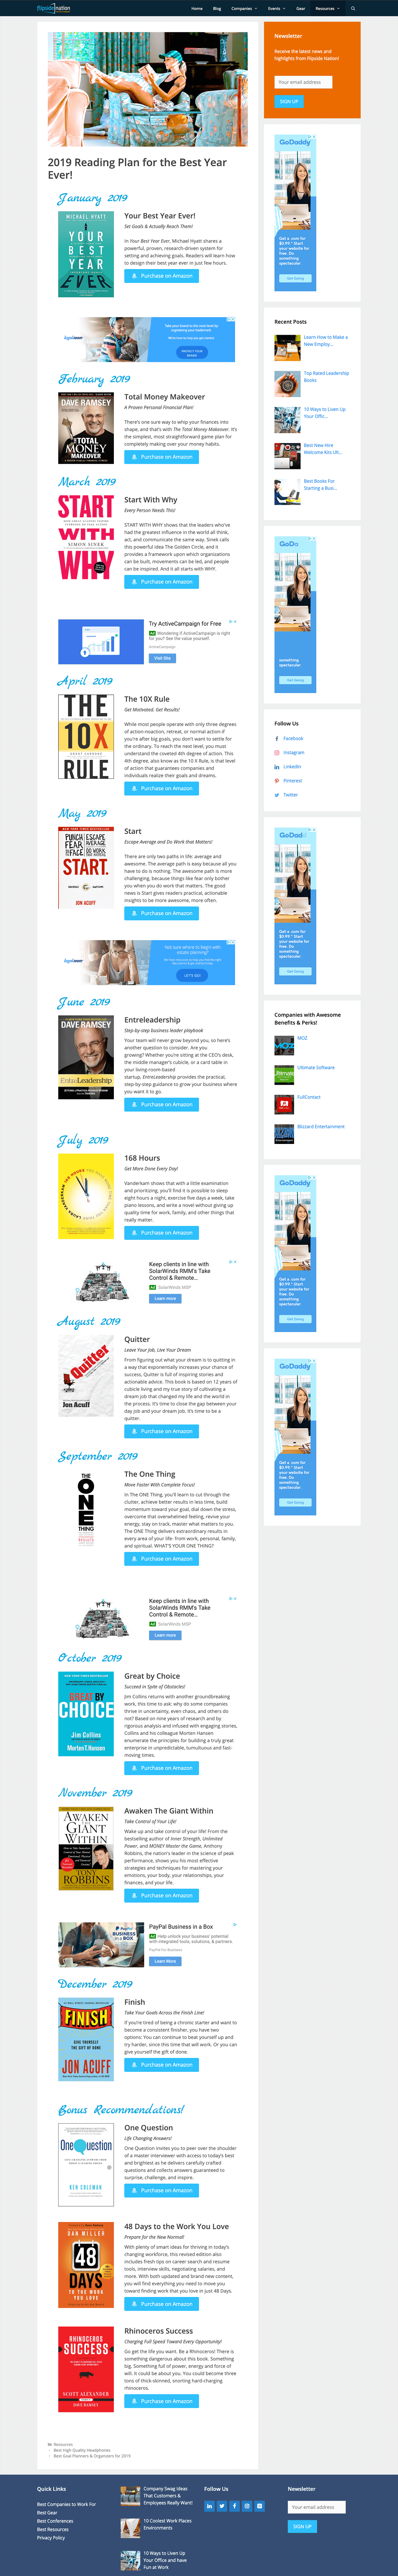 Flipside-Nation-Best-Companies-to-Work-For-Website-Design-Books